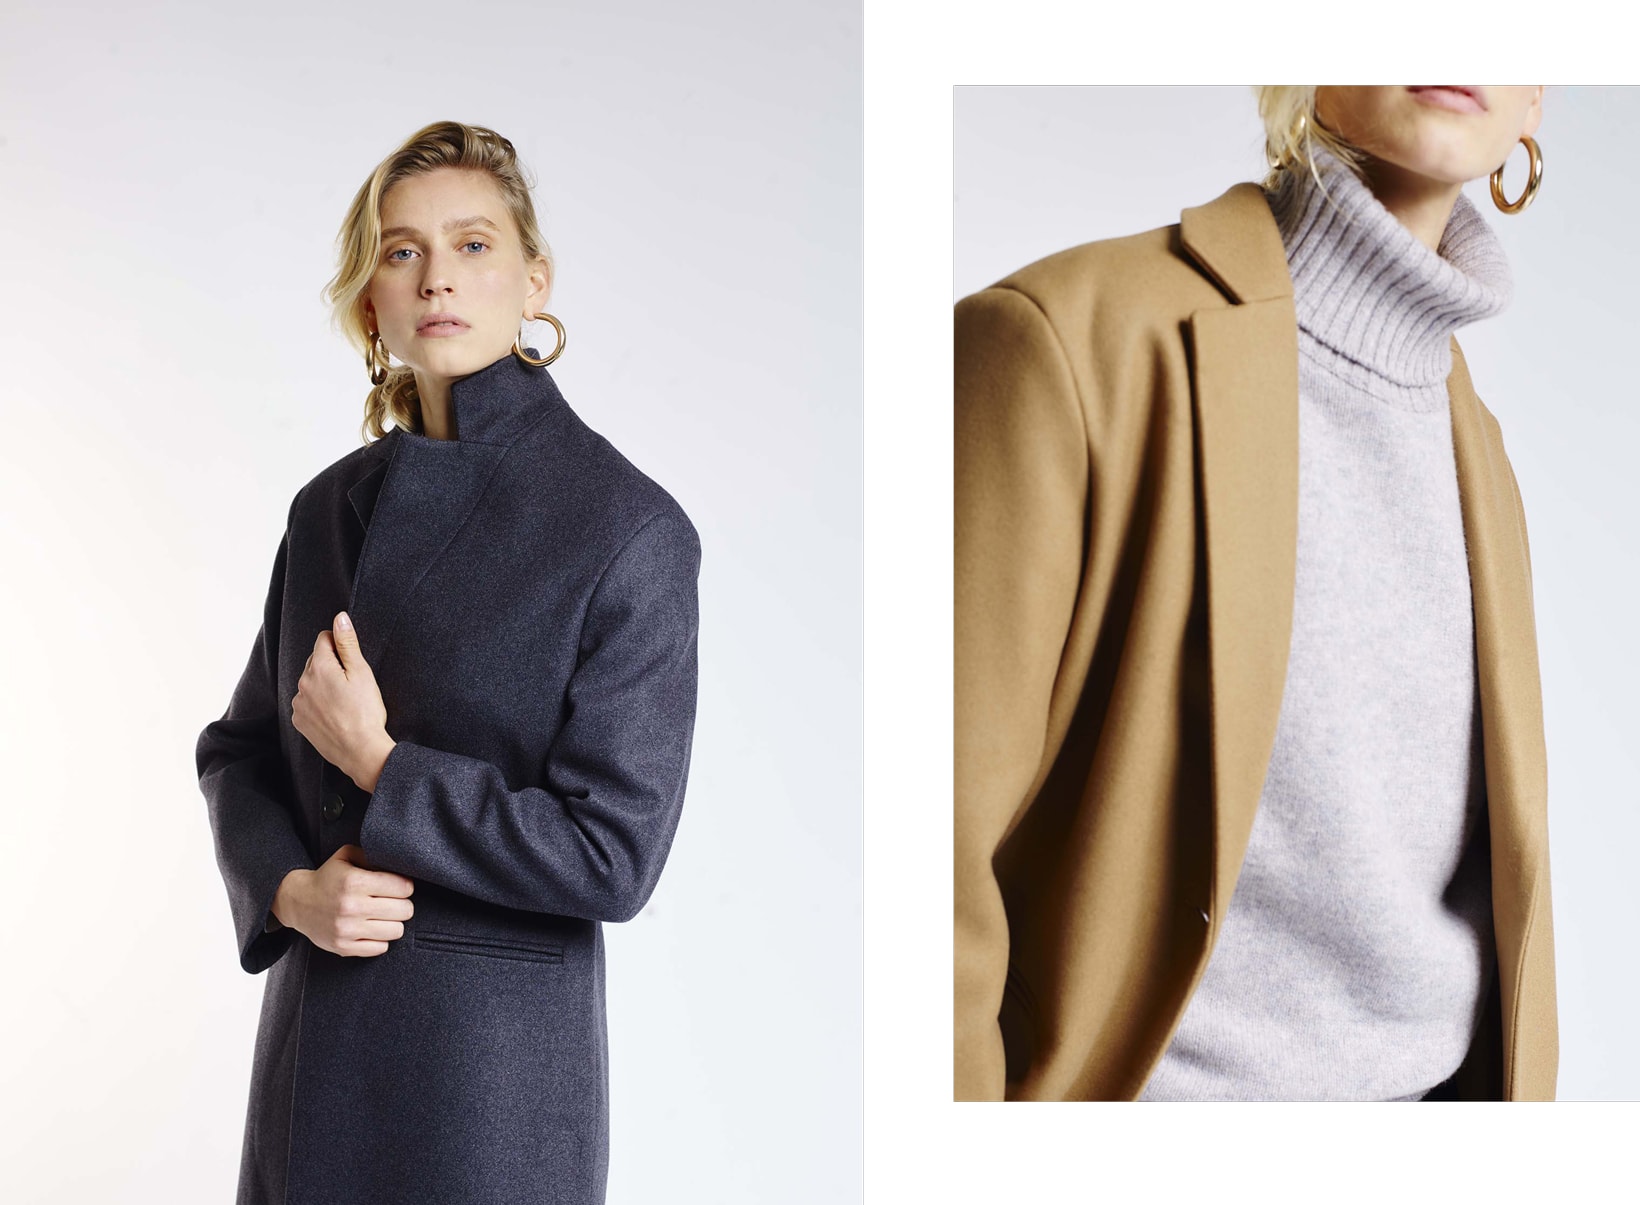 Harmony Paris A Daily Uniform Collection Lookbook Jacket Sweater Grey